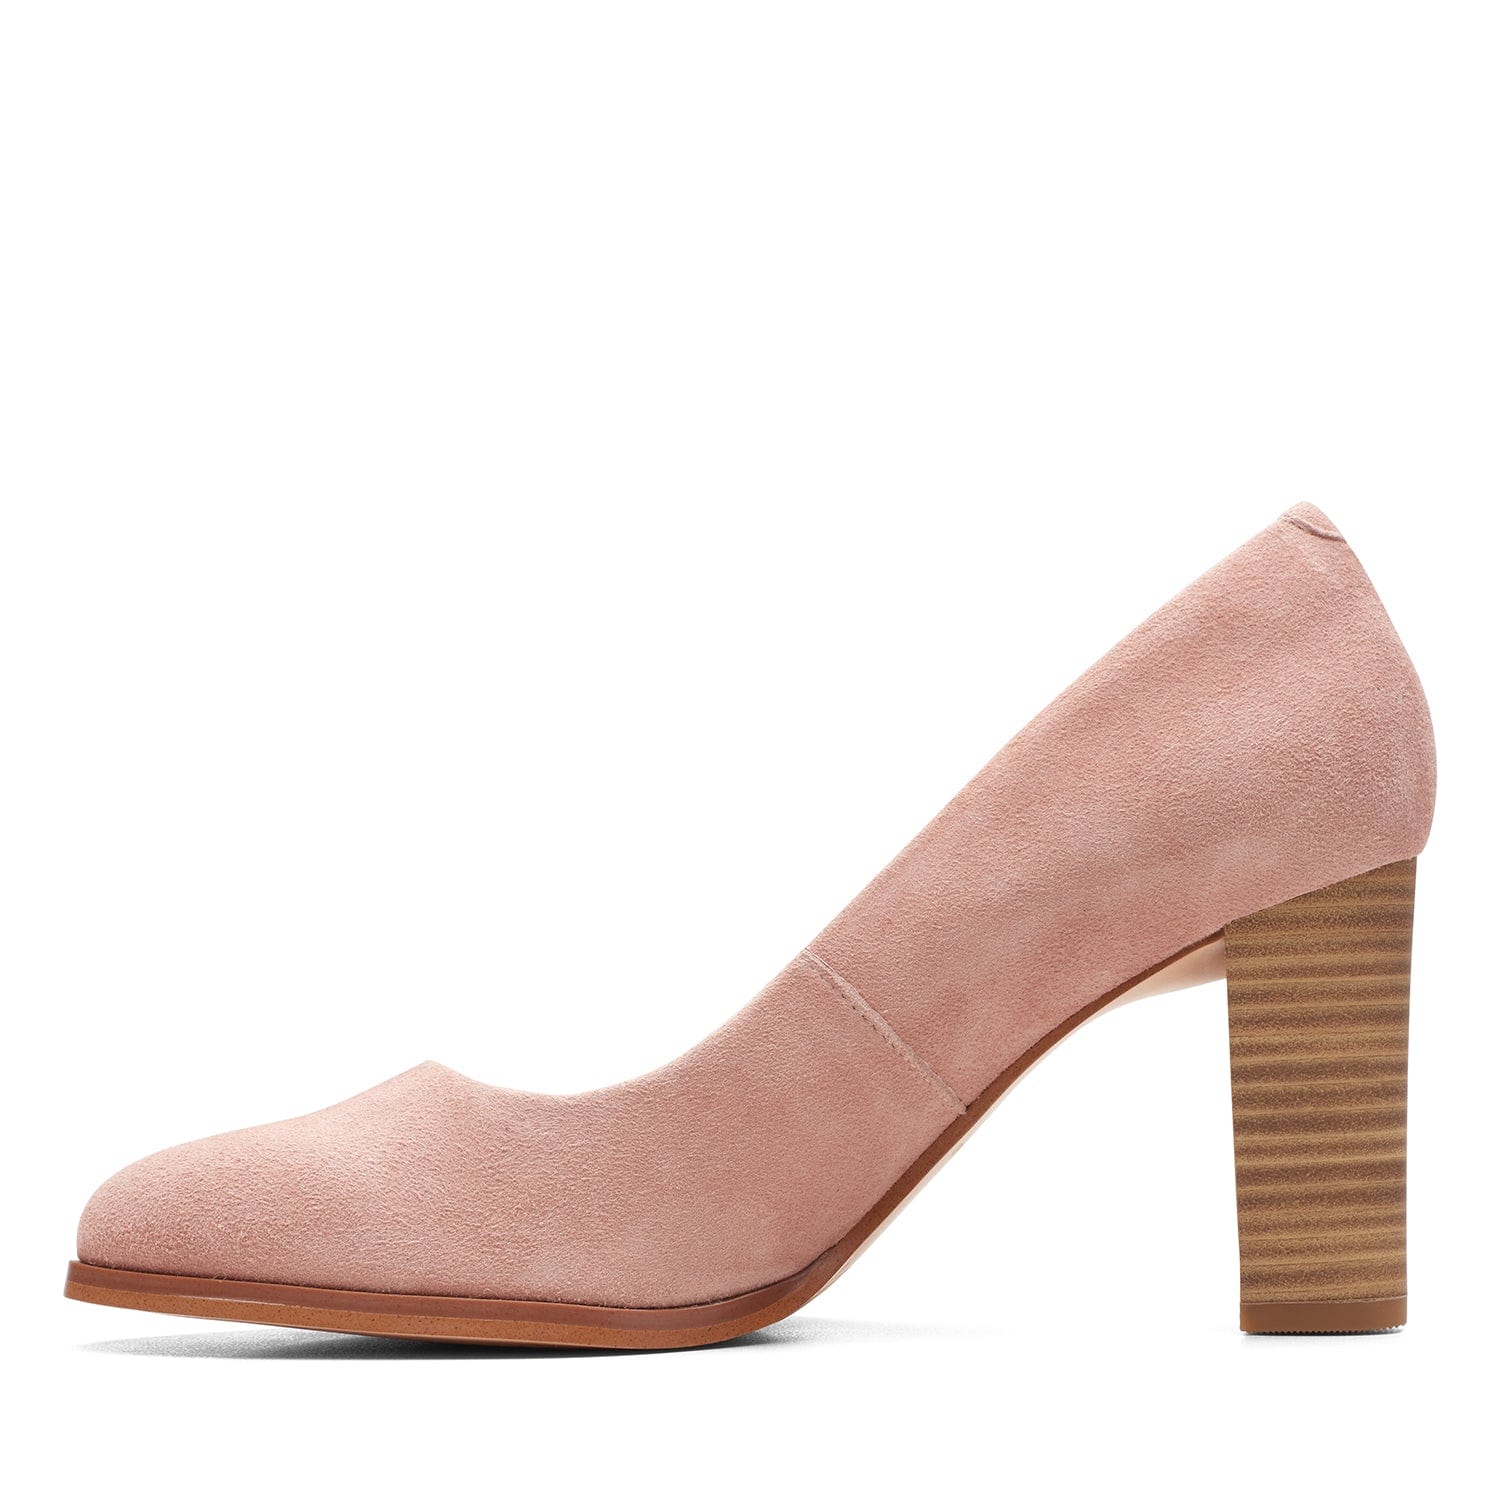 Clarks Kaylin Cara 2 - Shoes - Rose Suede - 261657844 - D Width (Standard Fit)